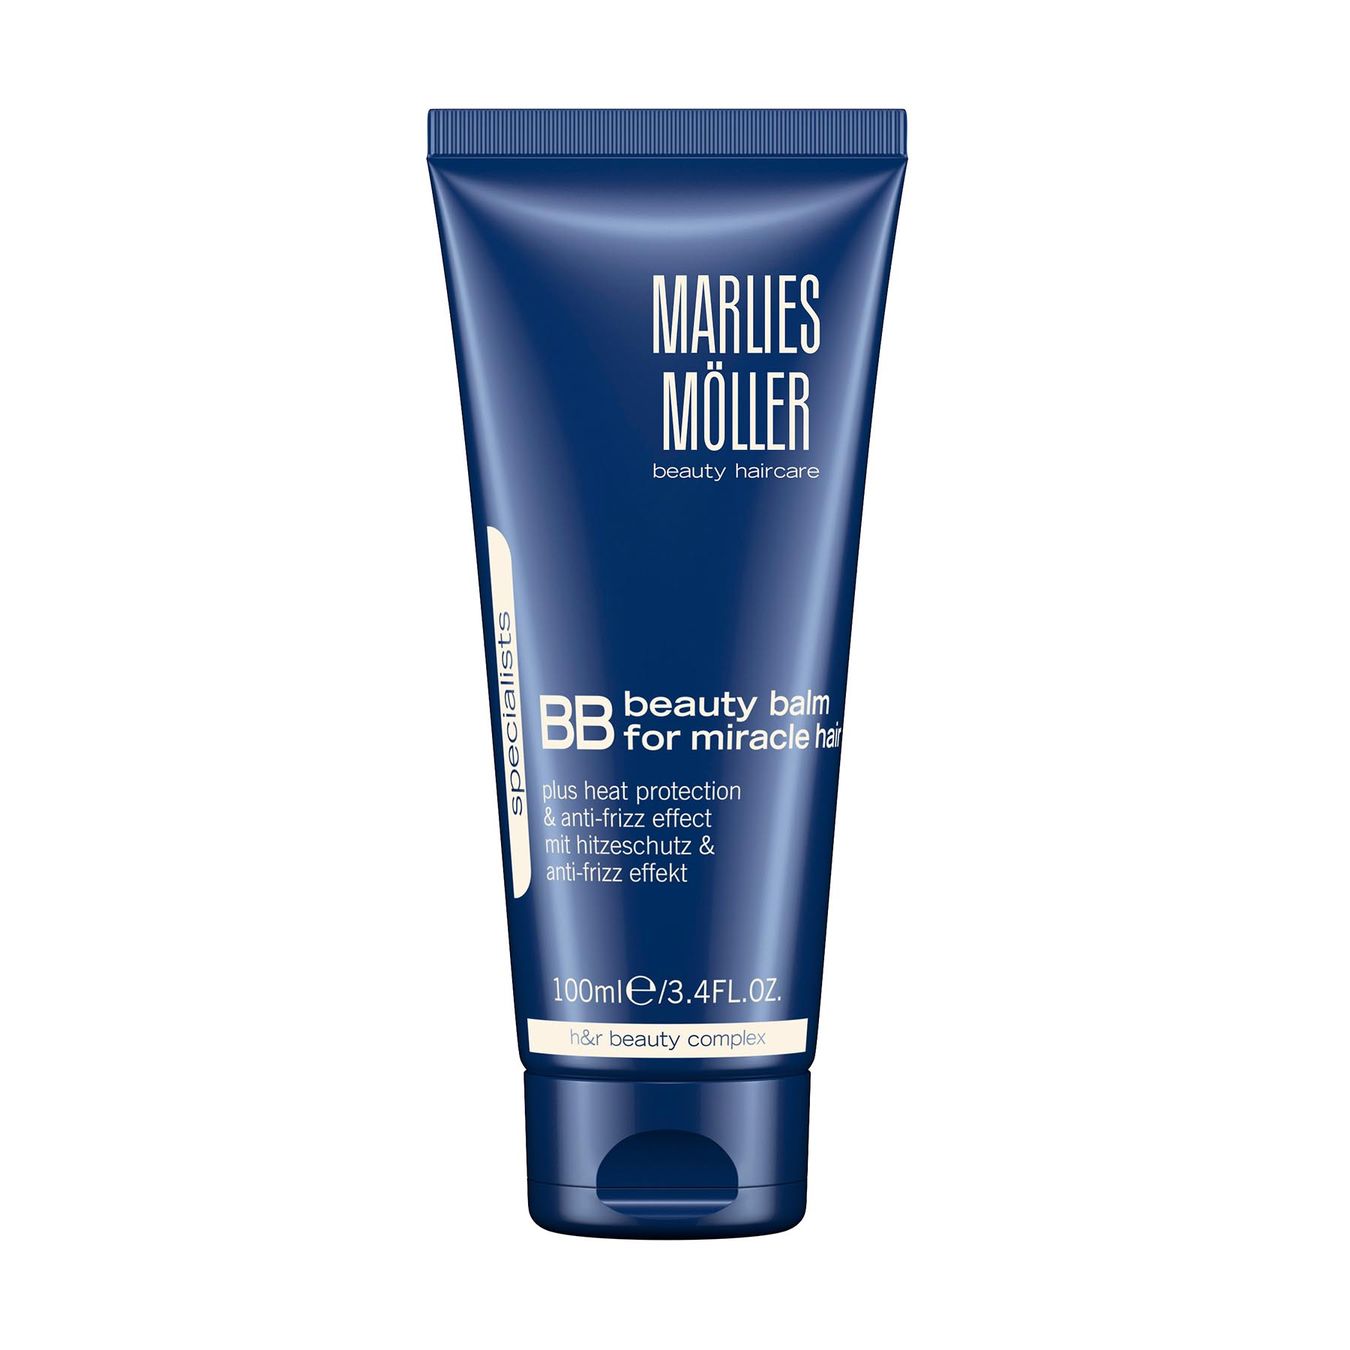 Marlies Möller Specialists BB BeautyBalm for miracle hair von Marlies Möller